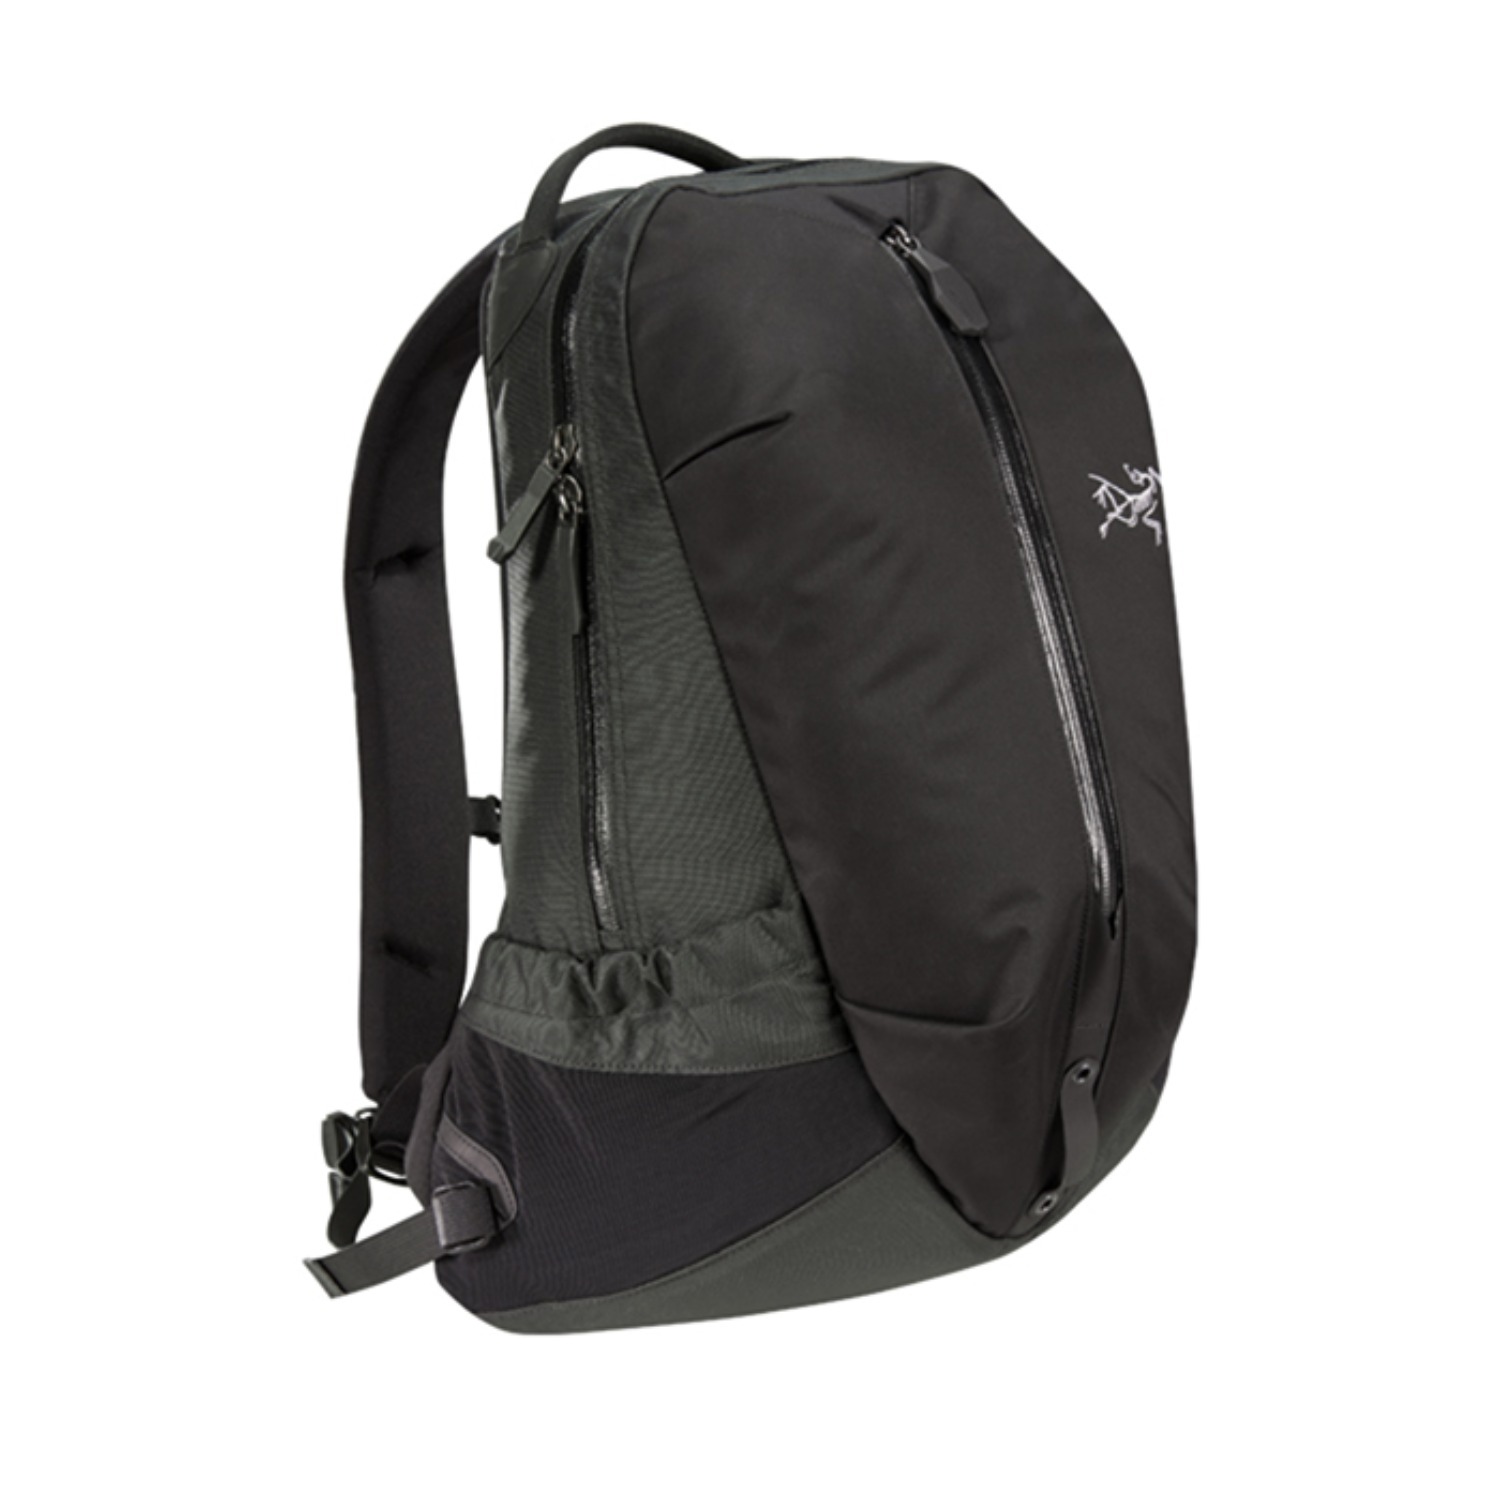 arro 22 backpack carbon copy